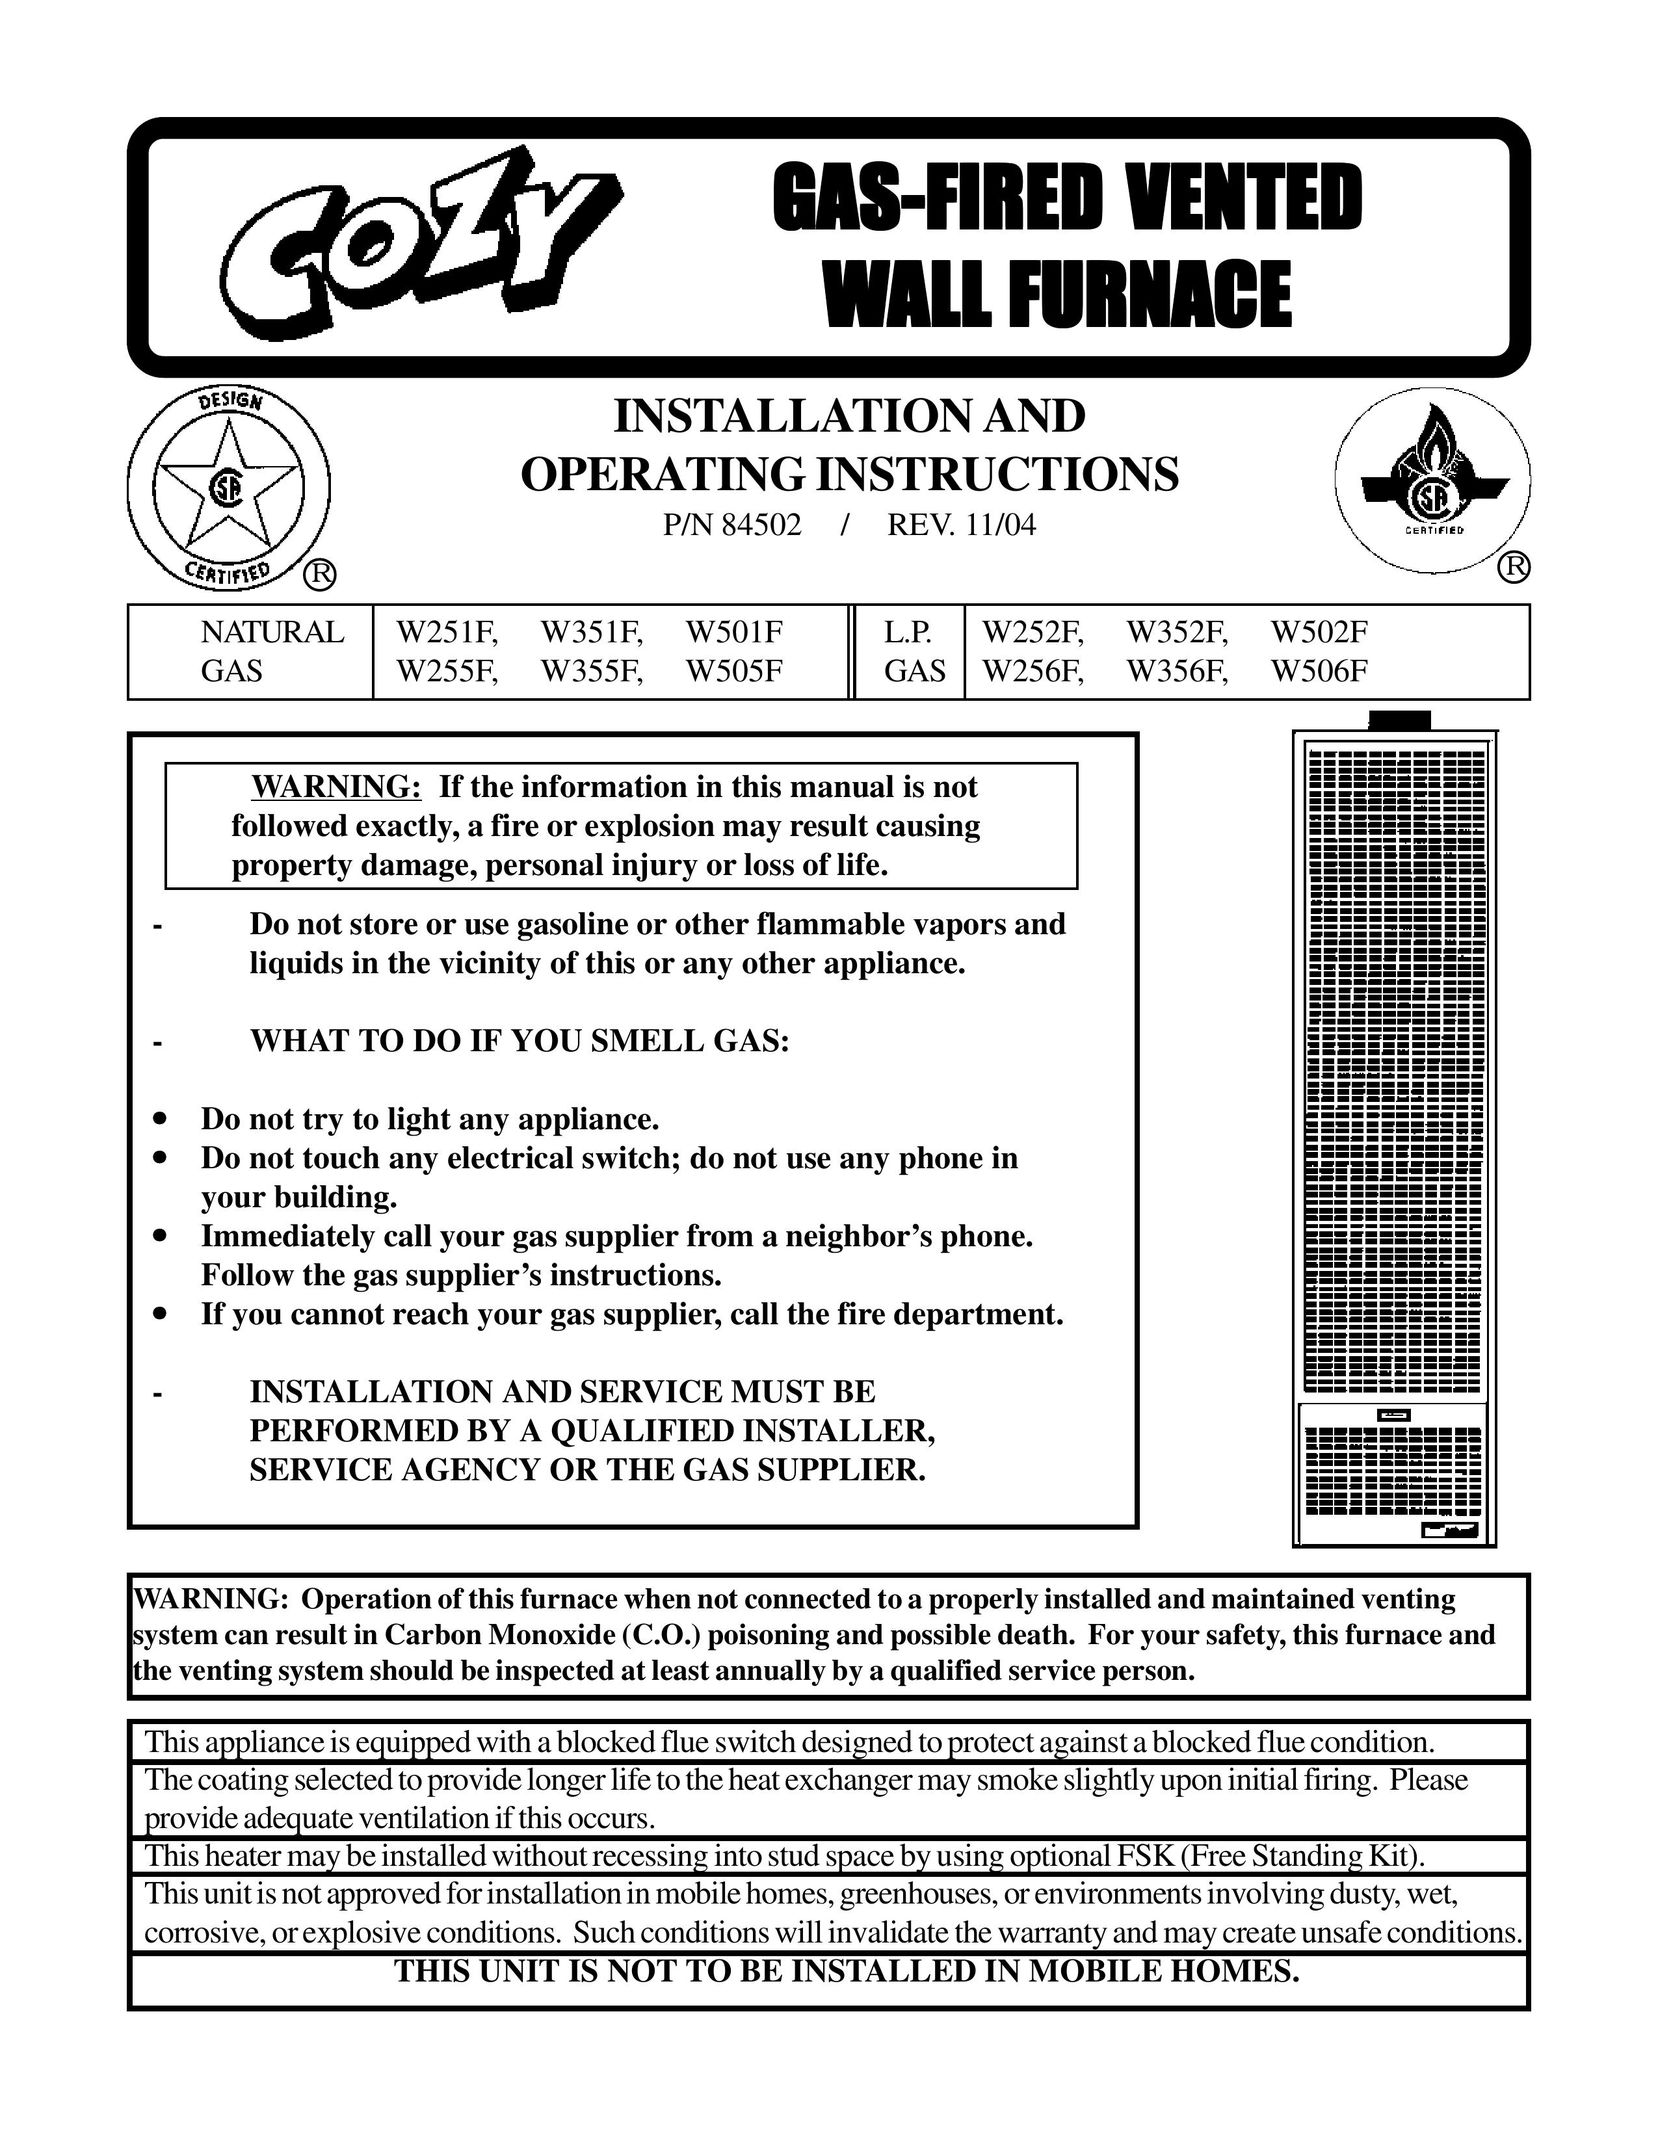 Louisville Tin and Stove W352F Furnace User Manual